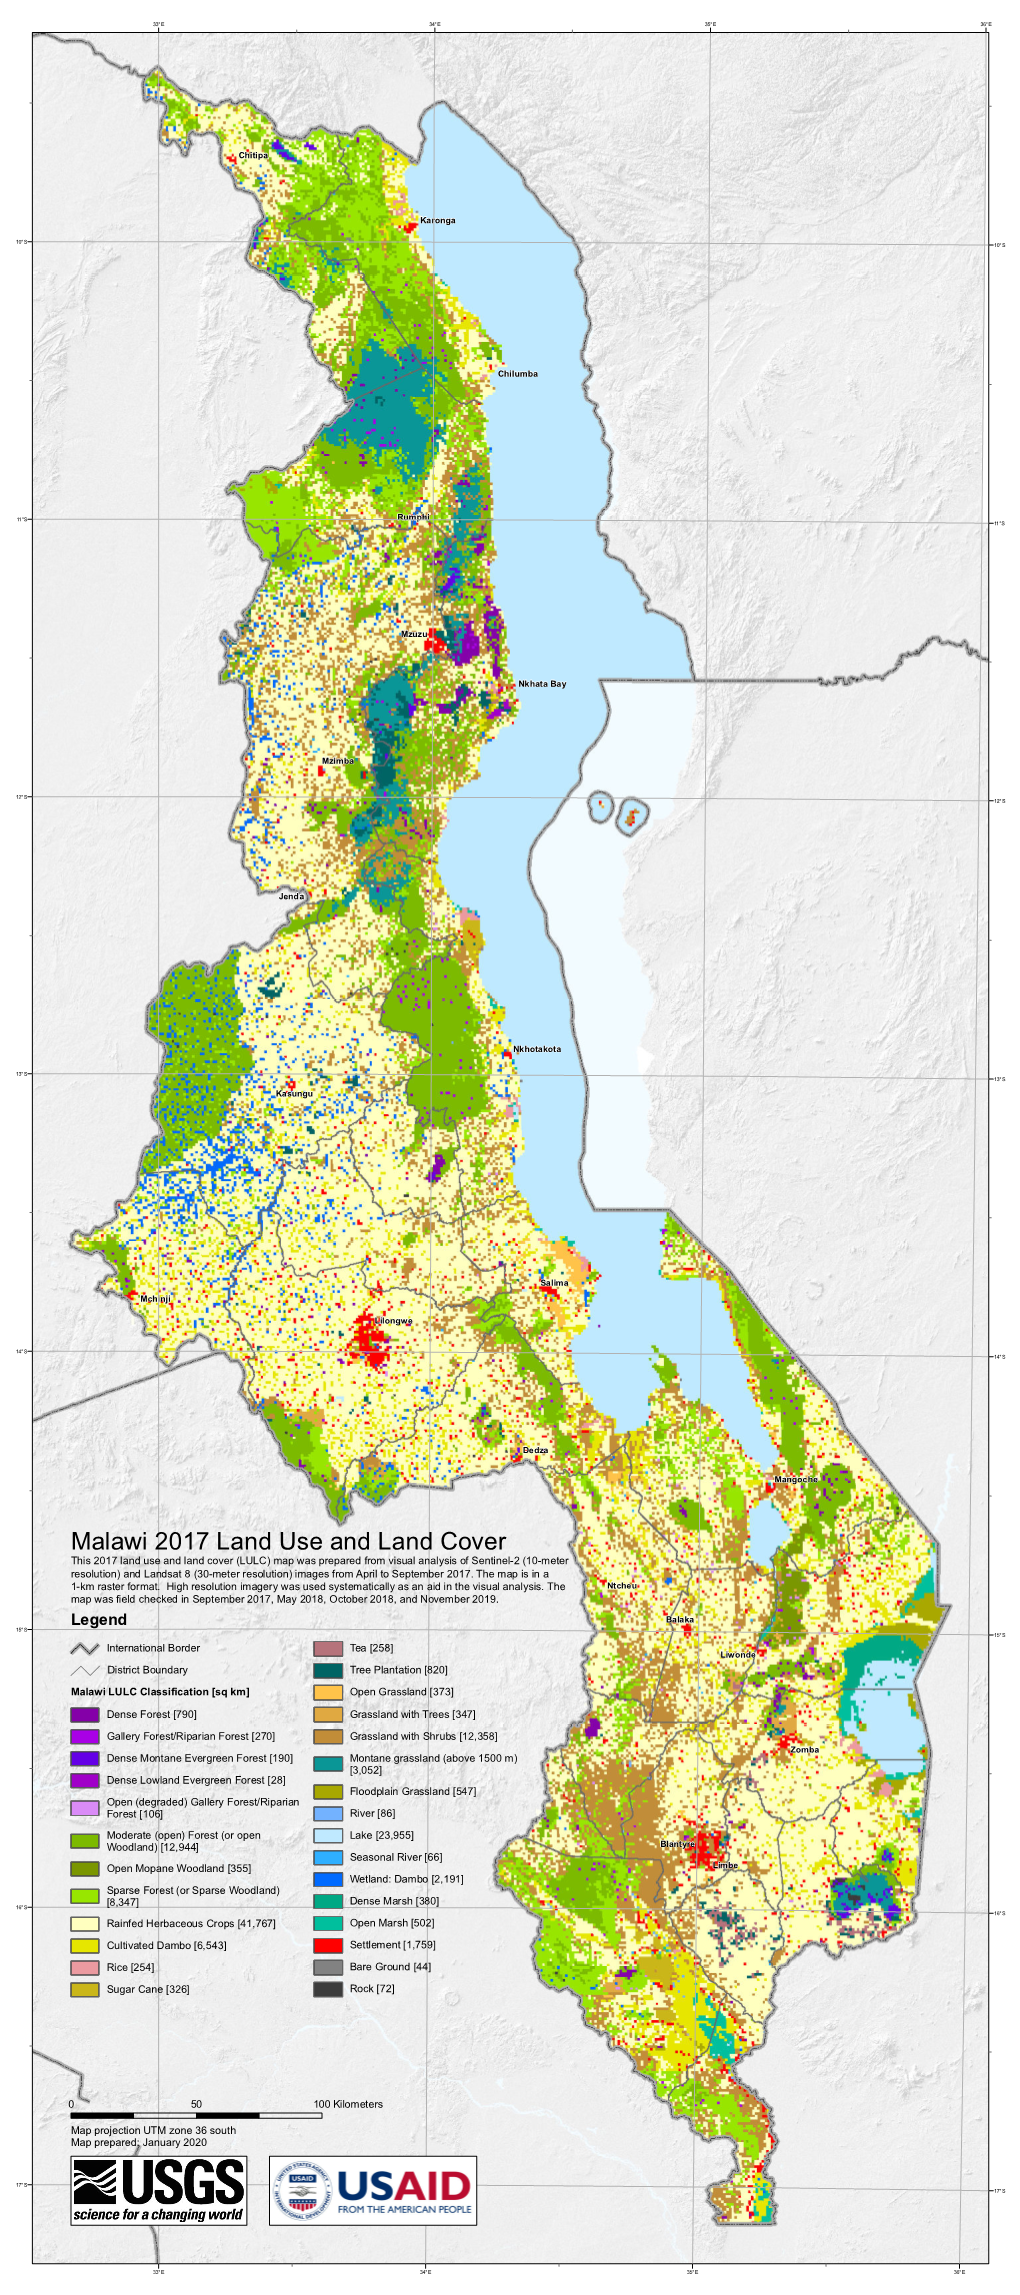 Malawi 2017 Land Use and Land Cover